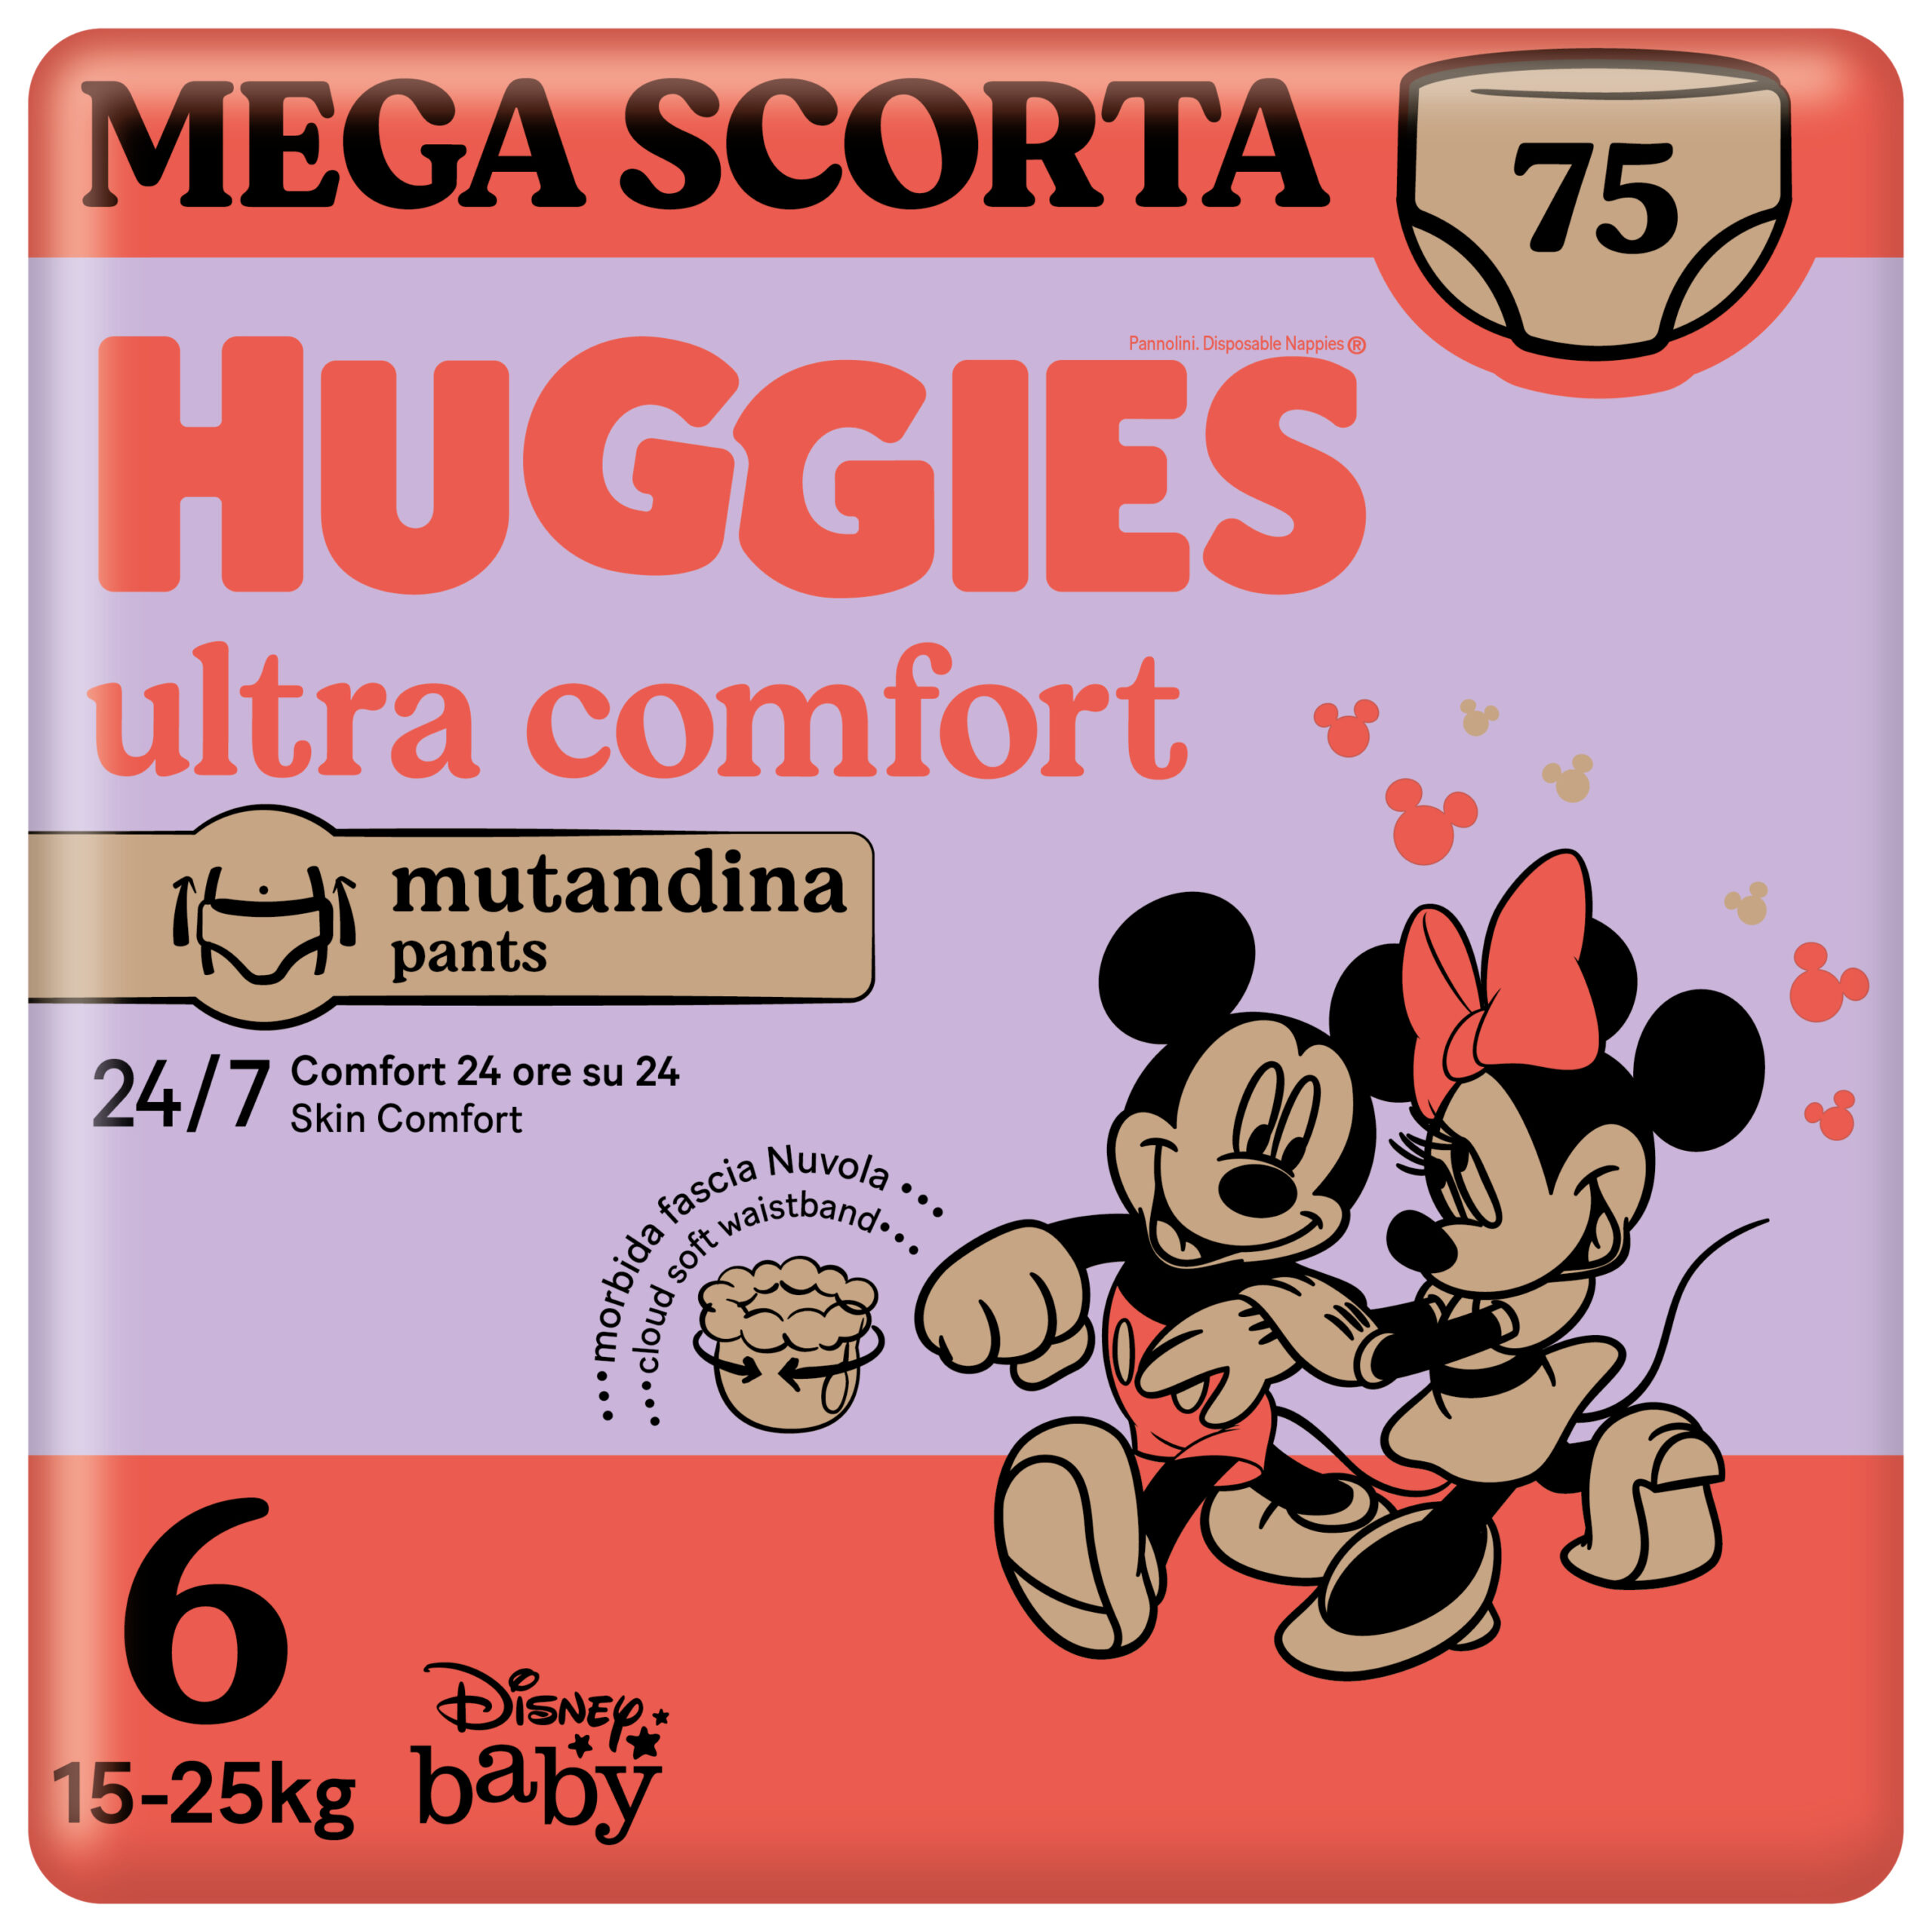 Huggies ultra comfort mutandina megapack tg.6 - 75 pezzi - Huggies